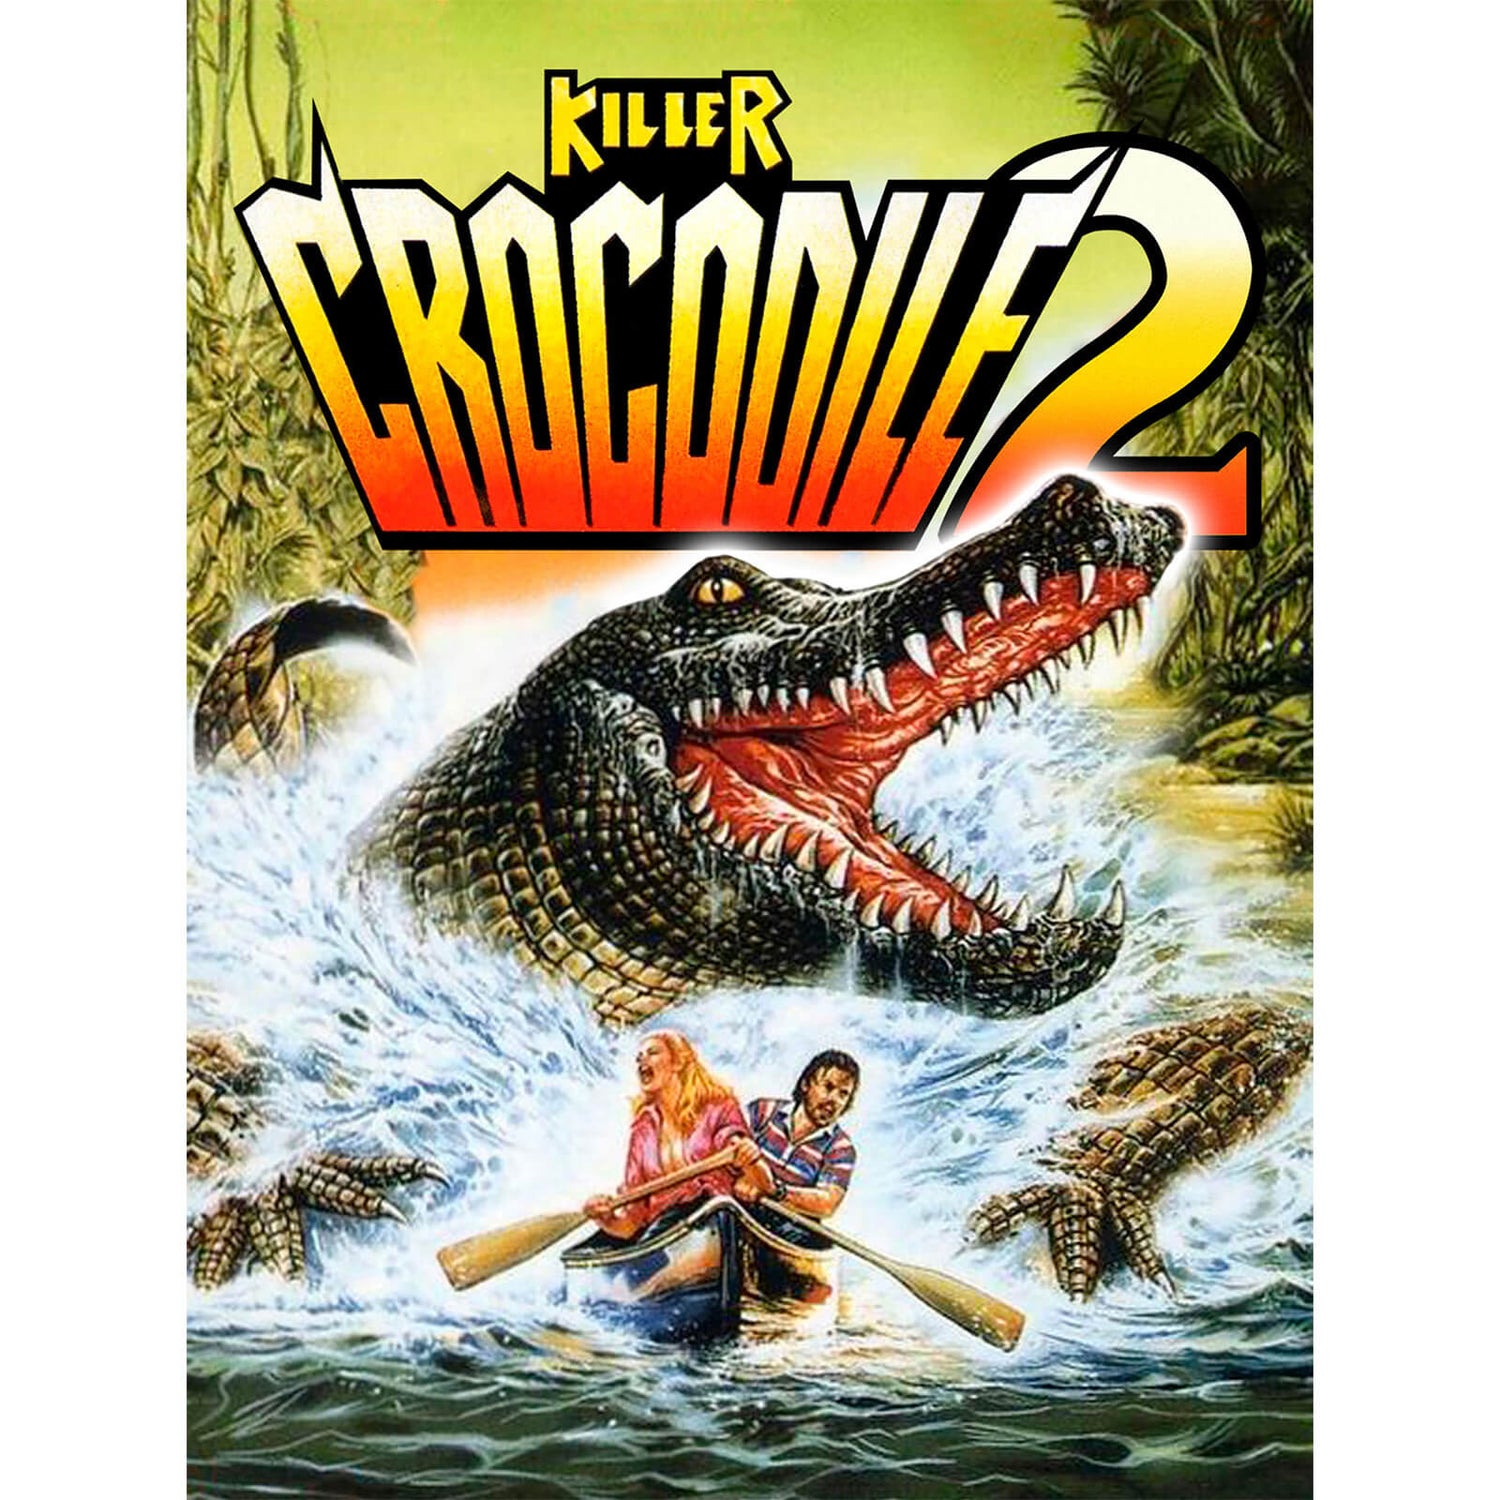 Killer Crocodile / Killer Crocodile 2 (US Import)